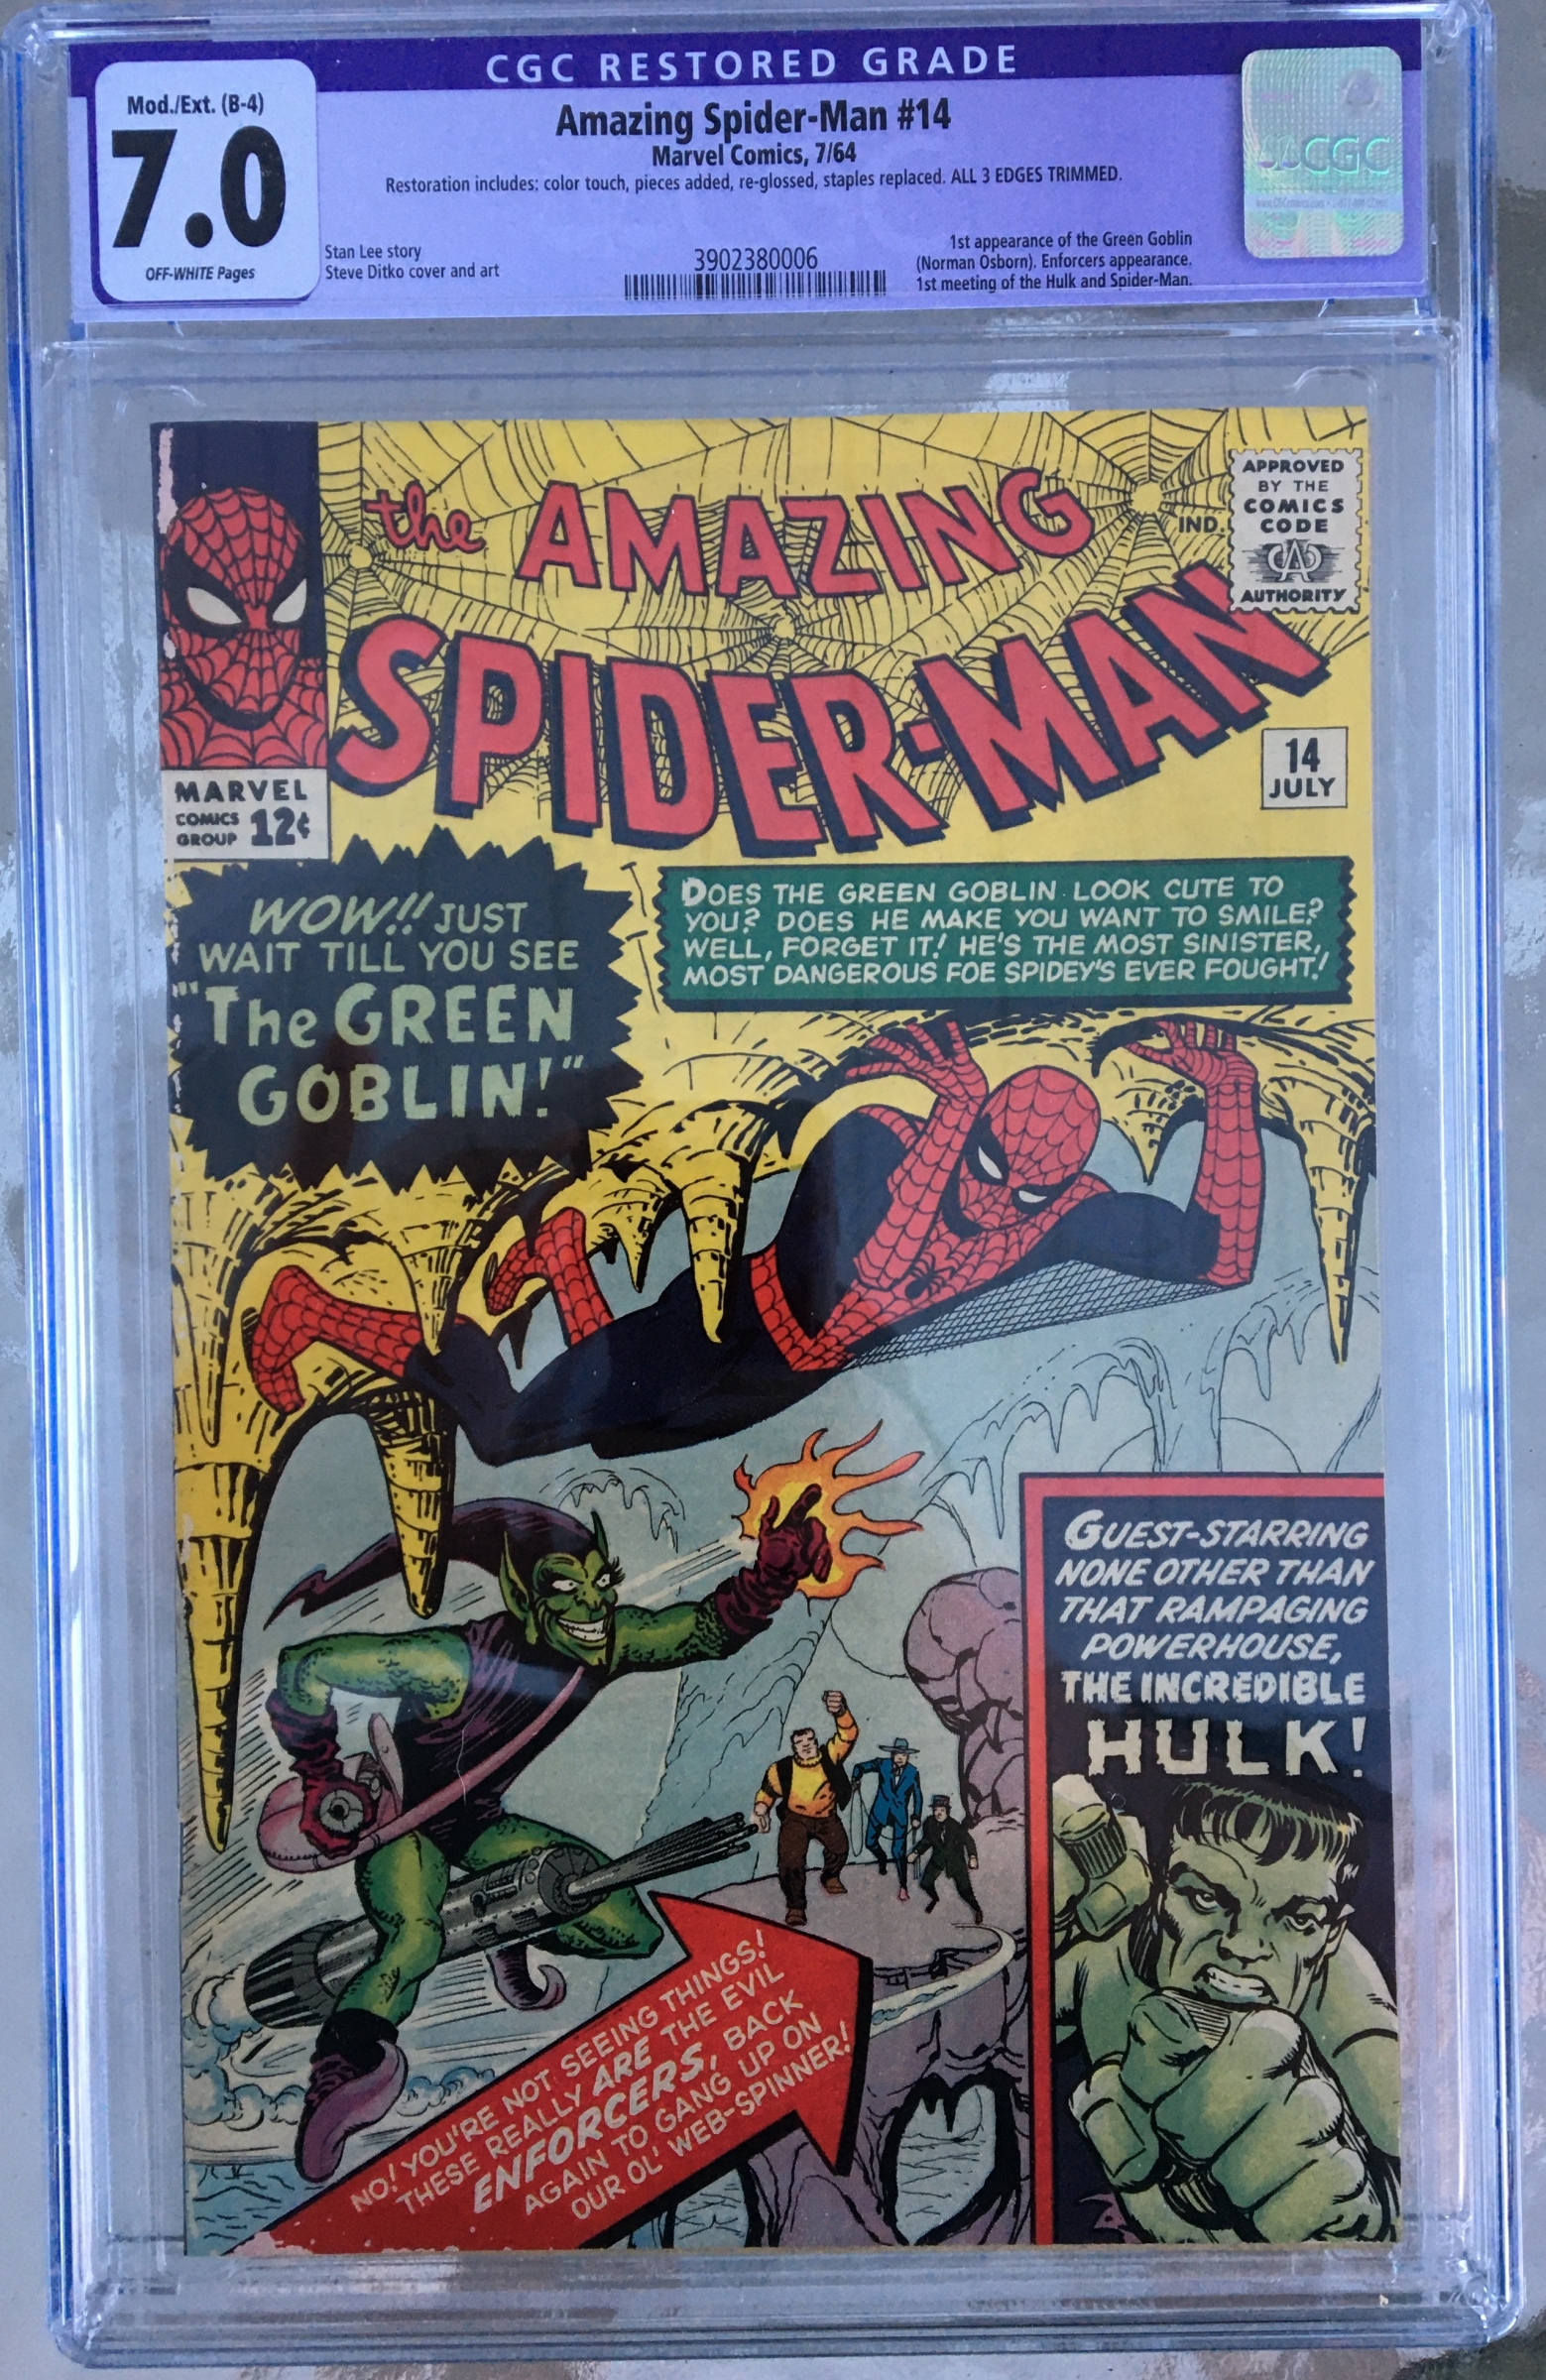 Amazing Spider-Man #14 CGC 7.0 ow